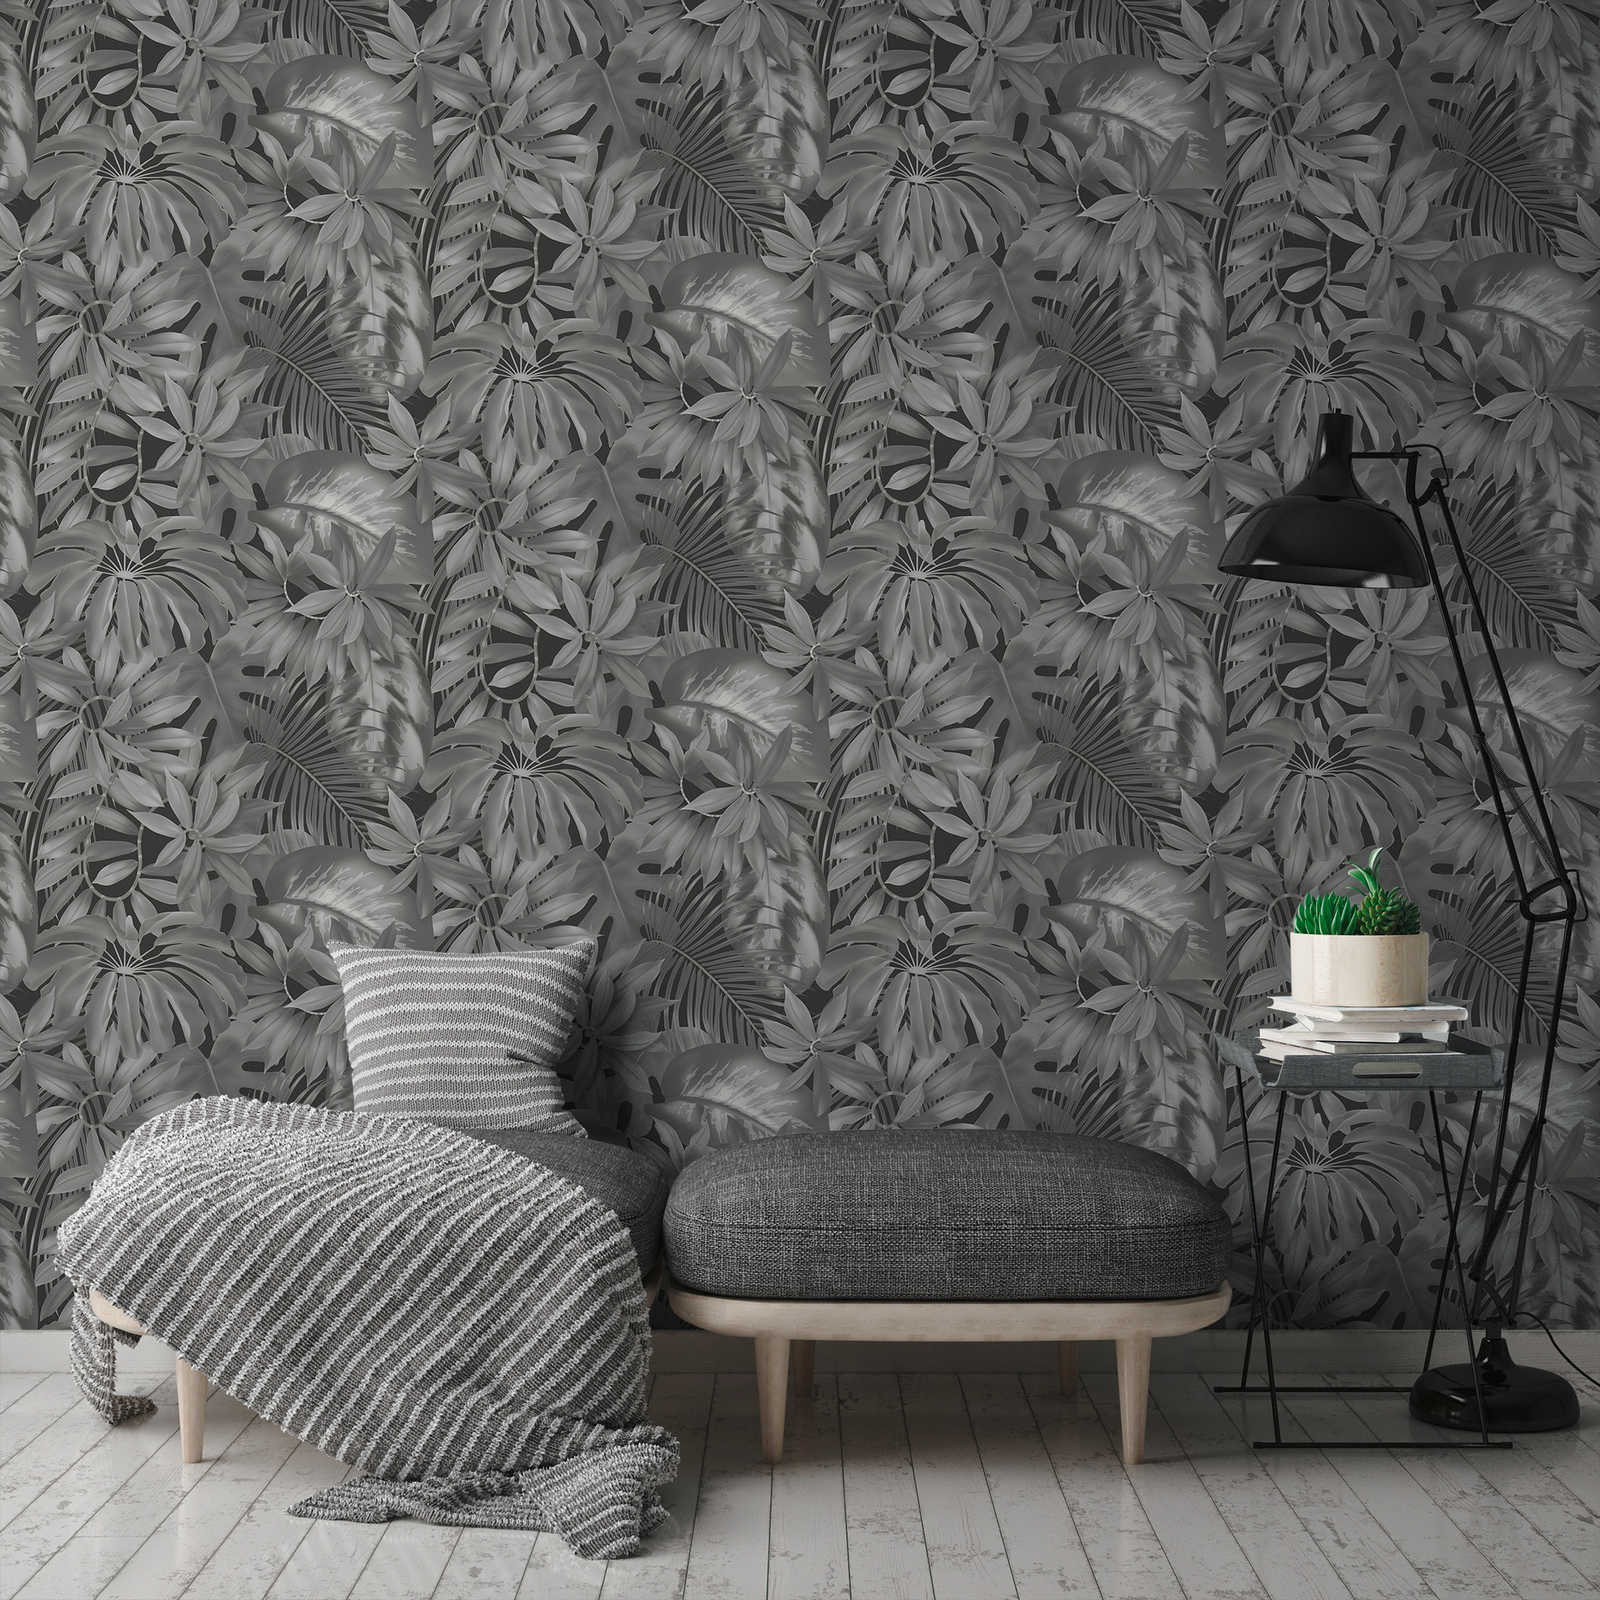             Leaves wallpaper jungle pattern - grey, black
        